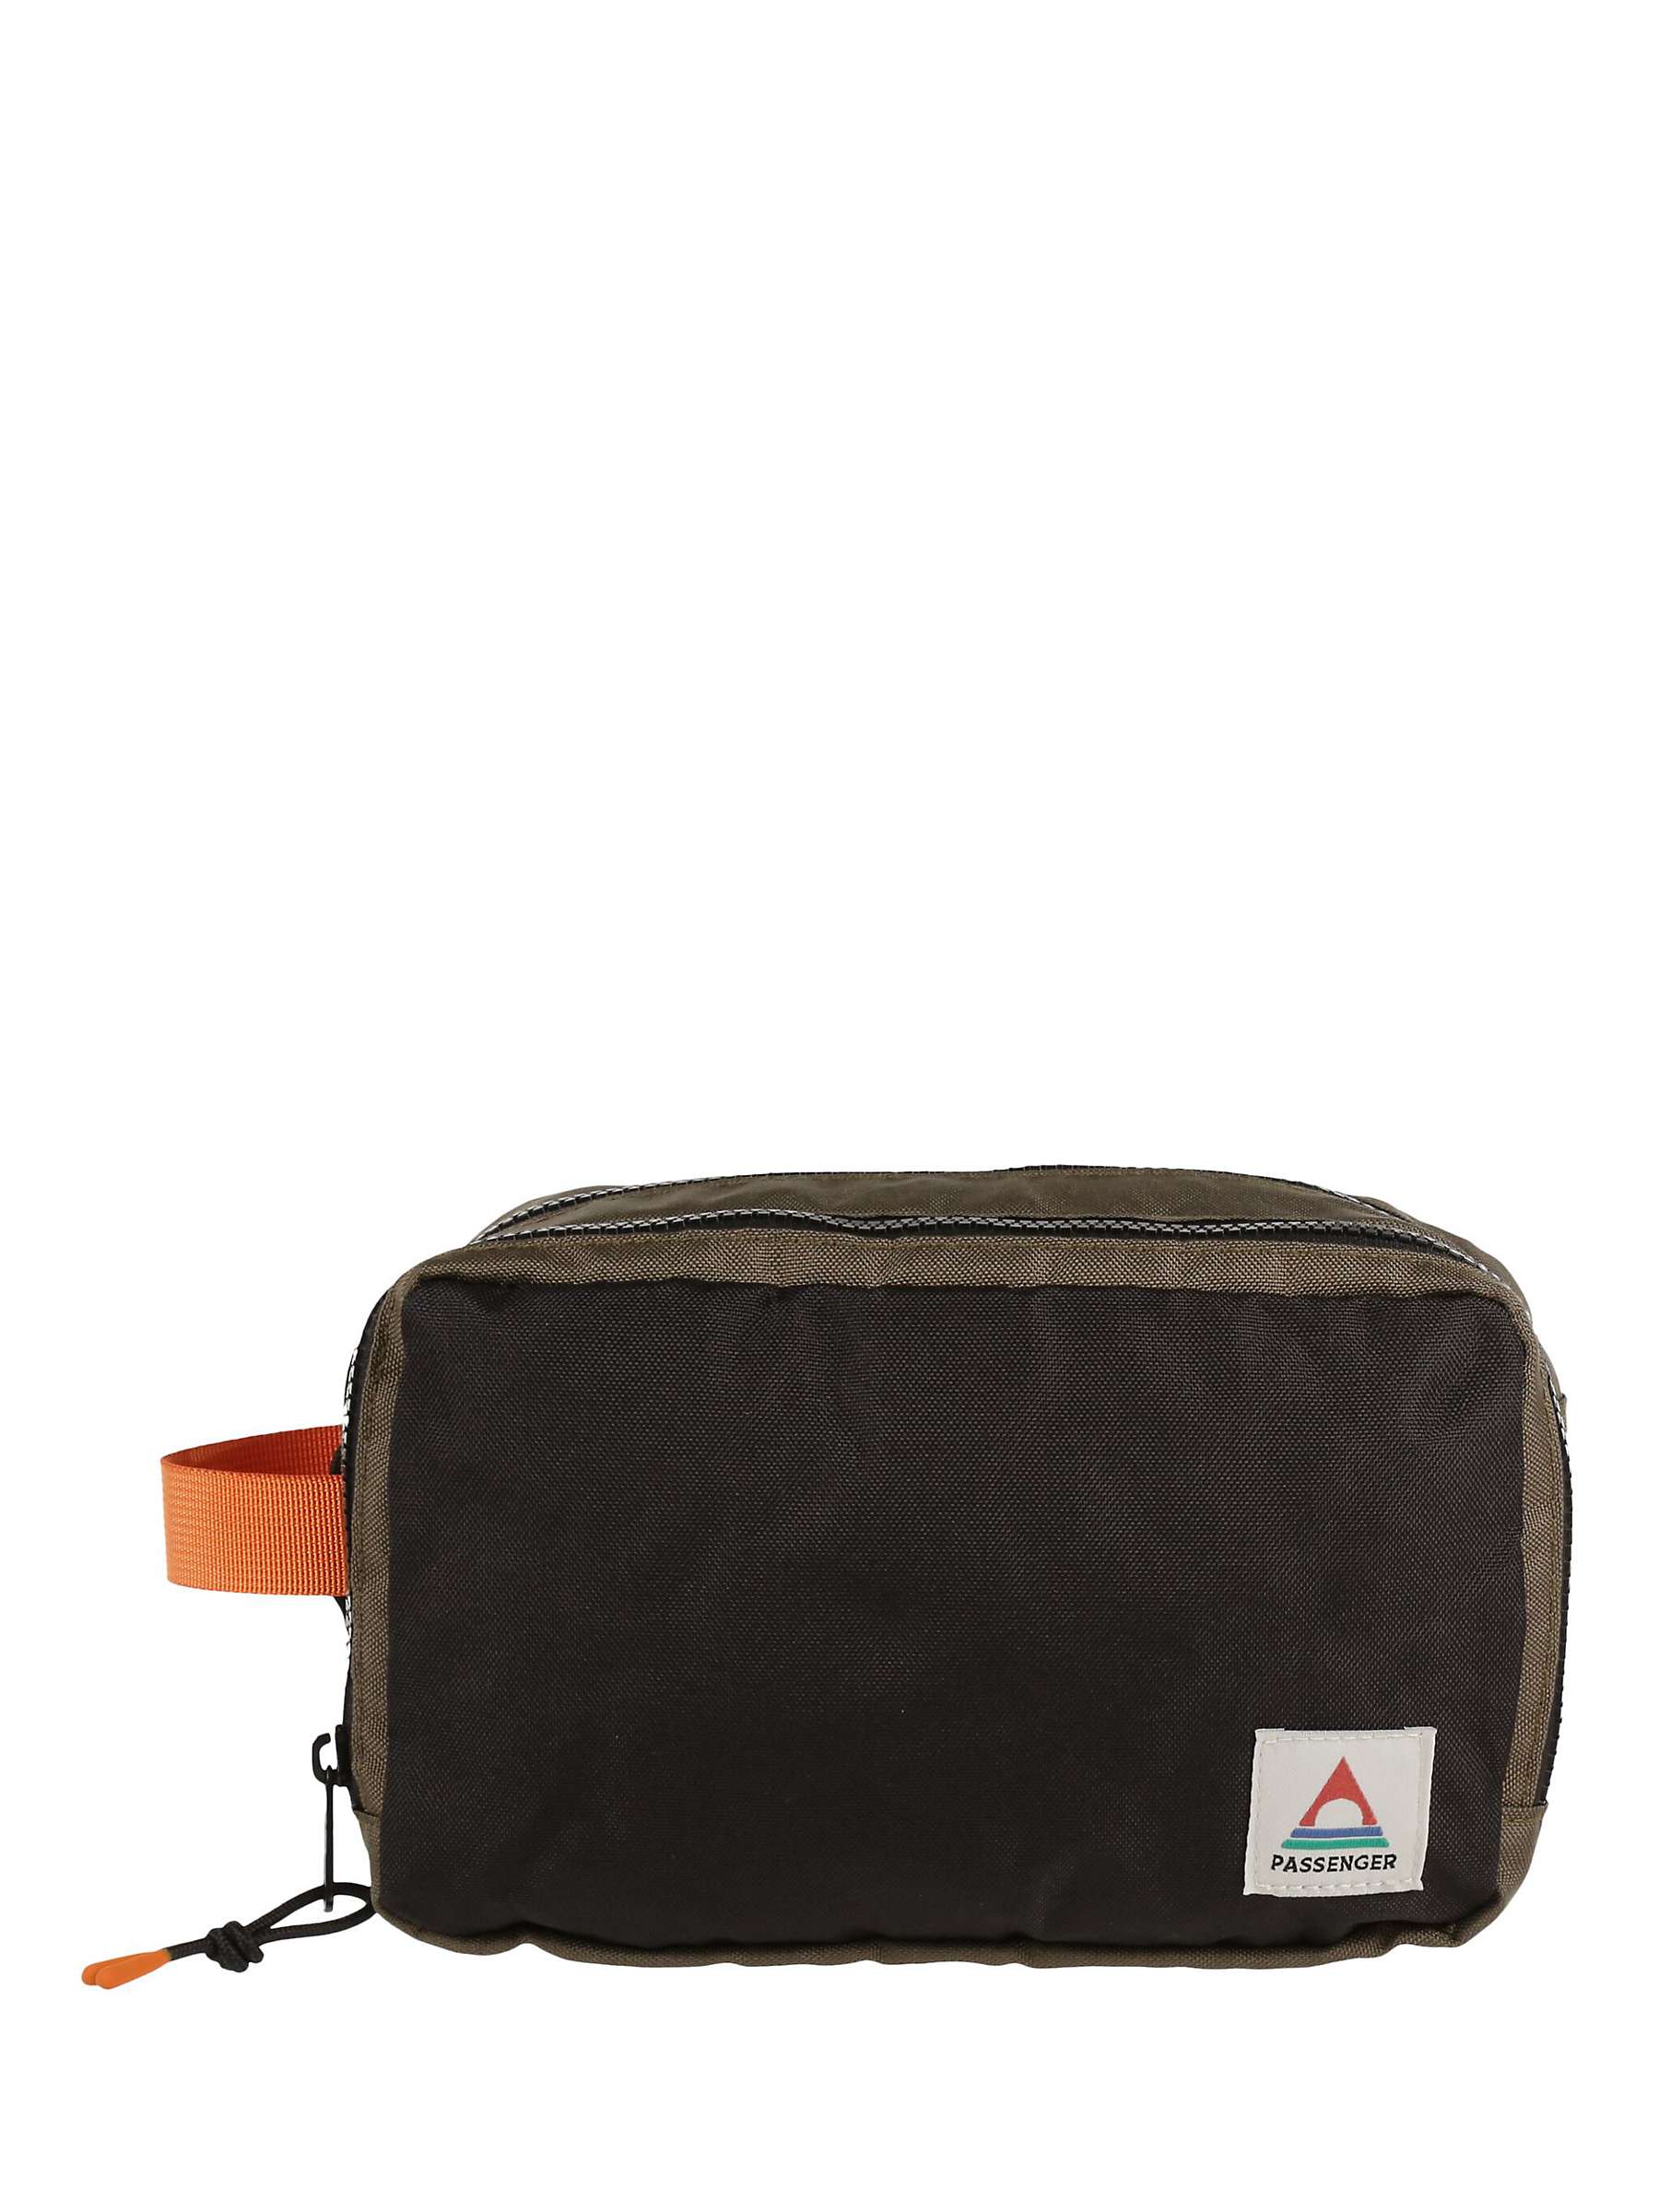 Buy Passenger Travel Wash Bag, Black/Khaki Online at johnlewis.com